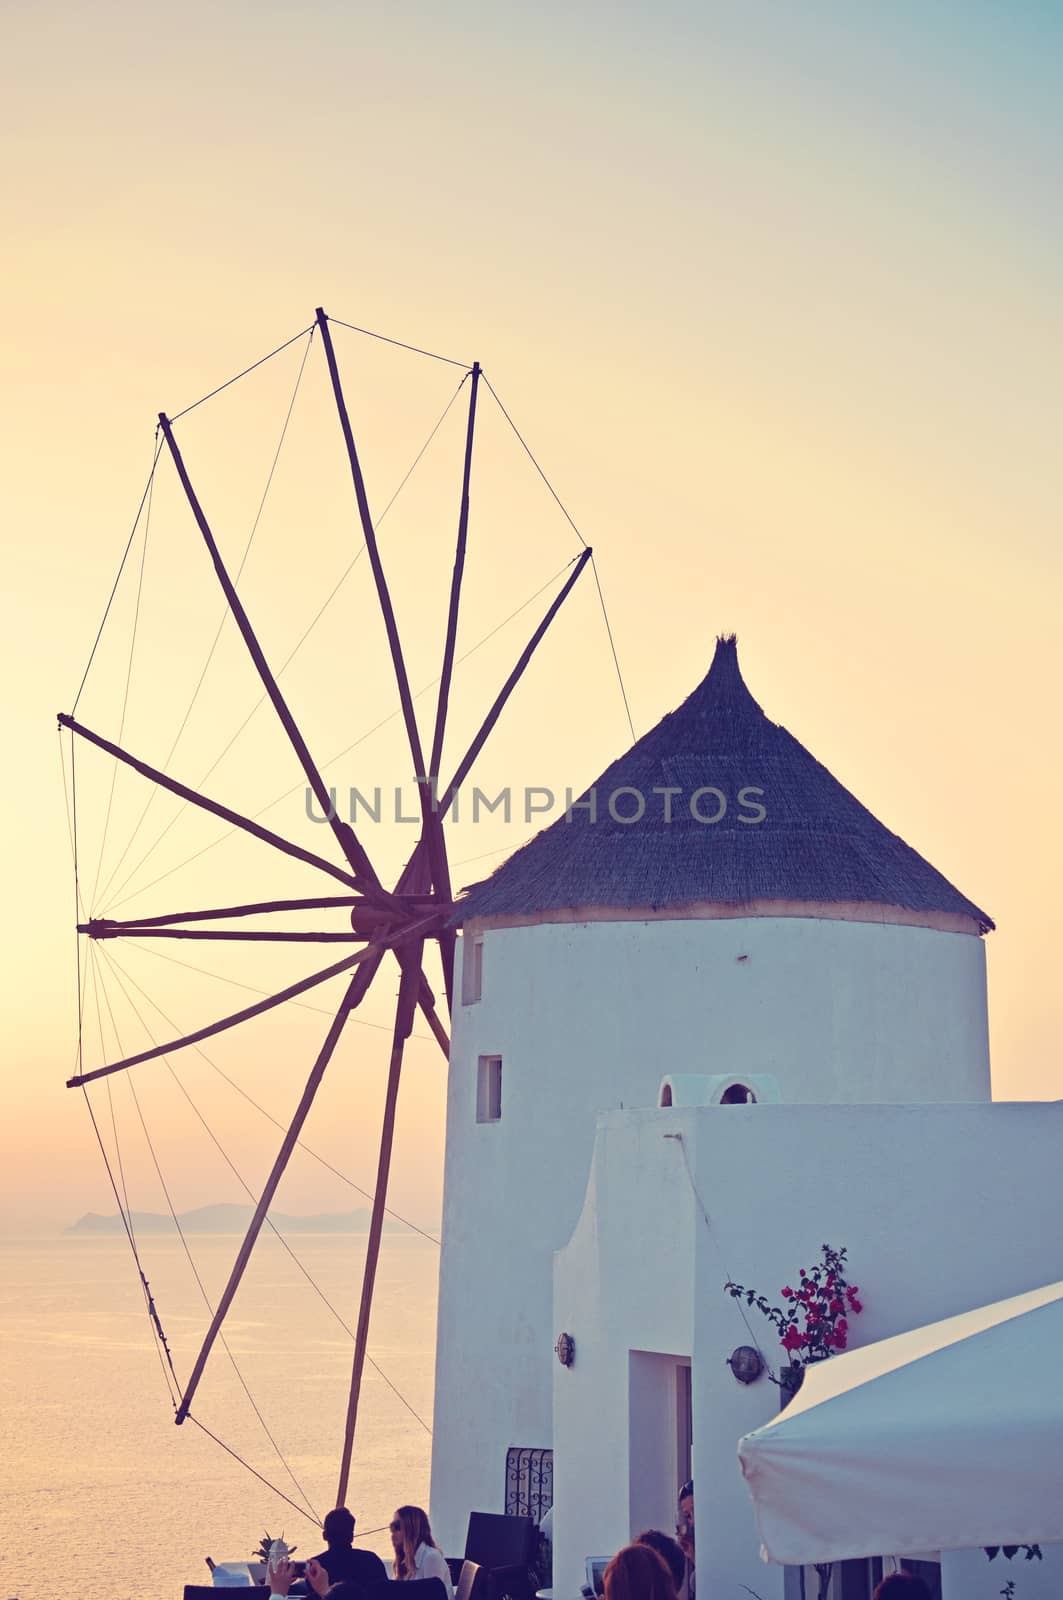 Windmill in Oia, Santorini, Greece by mitakag